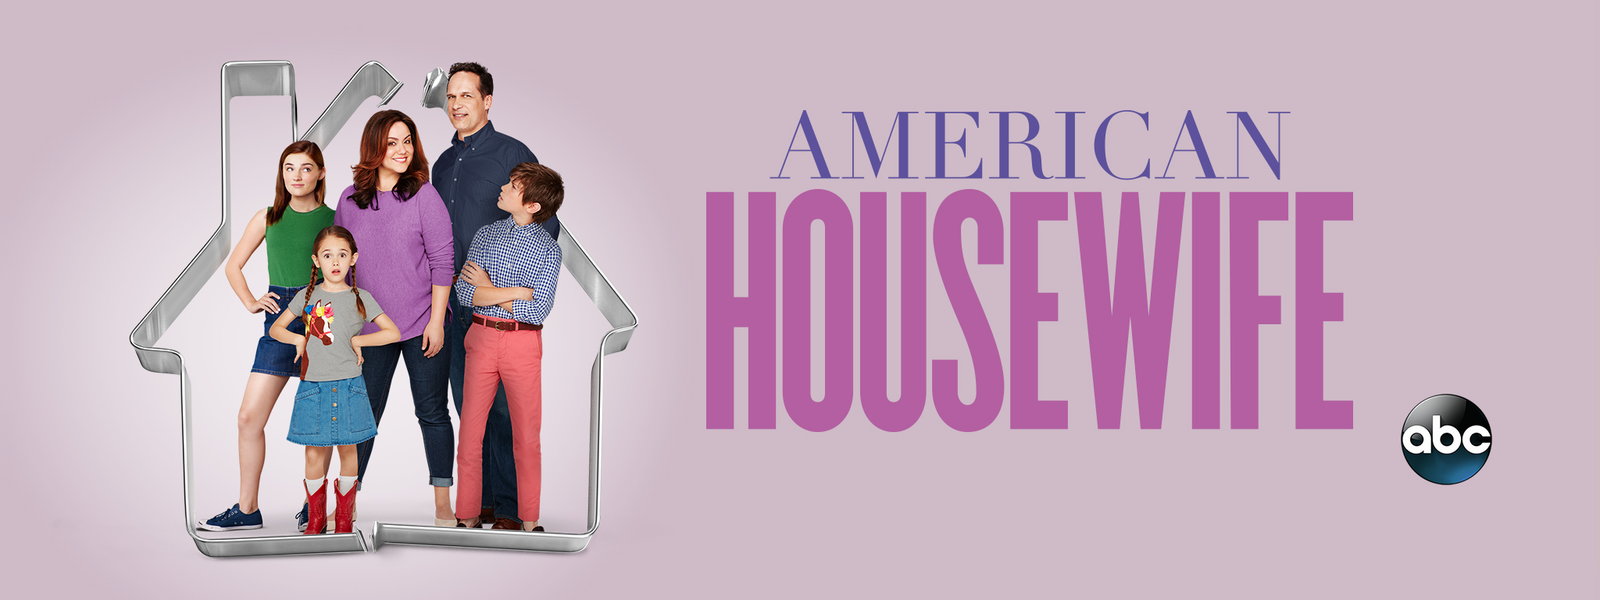 Watch American Housewife - Season 1